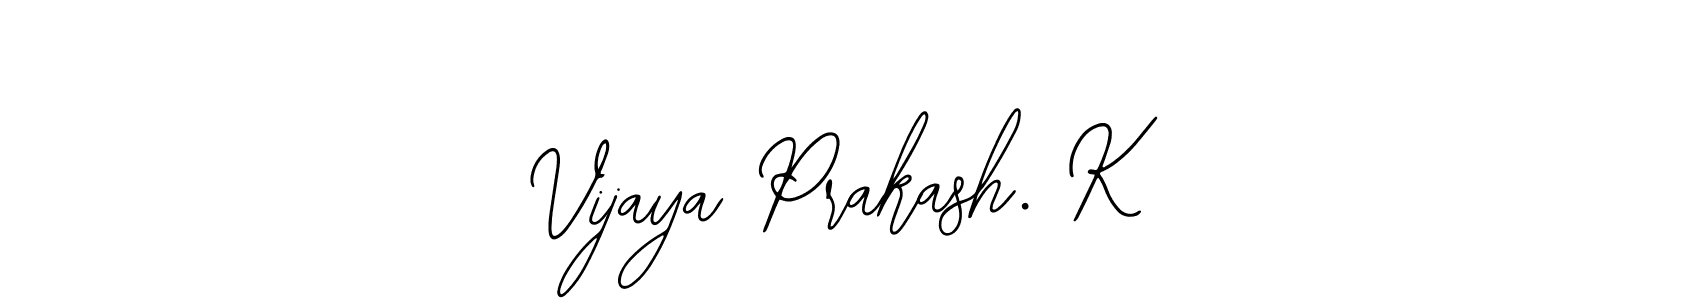 Make a beautiful signature design for name Vijaya Prakash. K. Use this online signature maker to create a handwritten signature for free. Vijaya Prakash. K signature style 12 images and pictures png